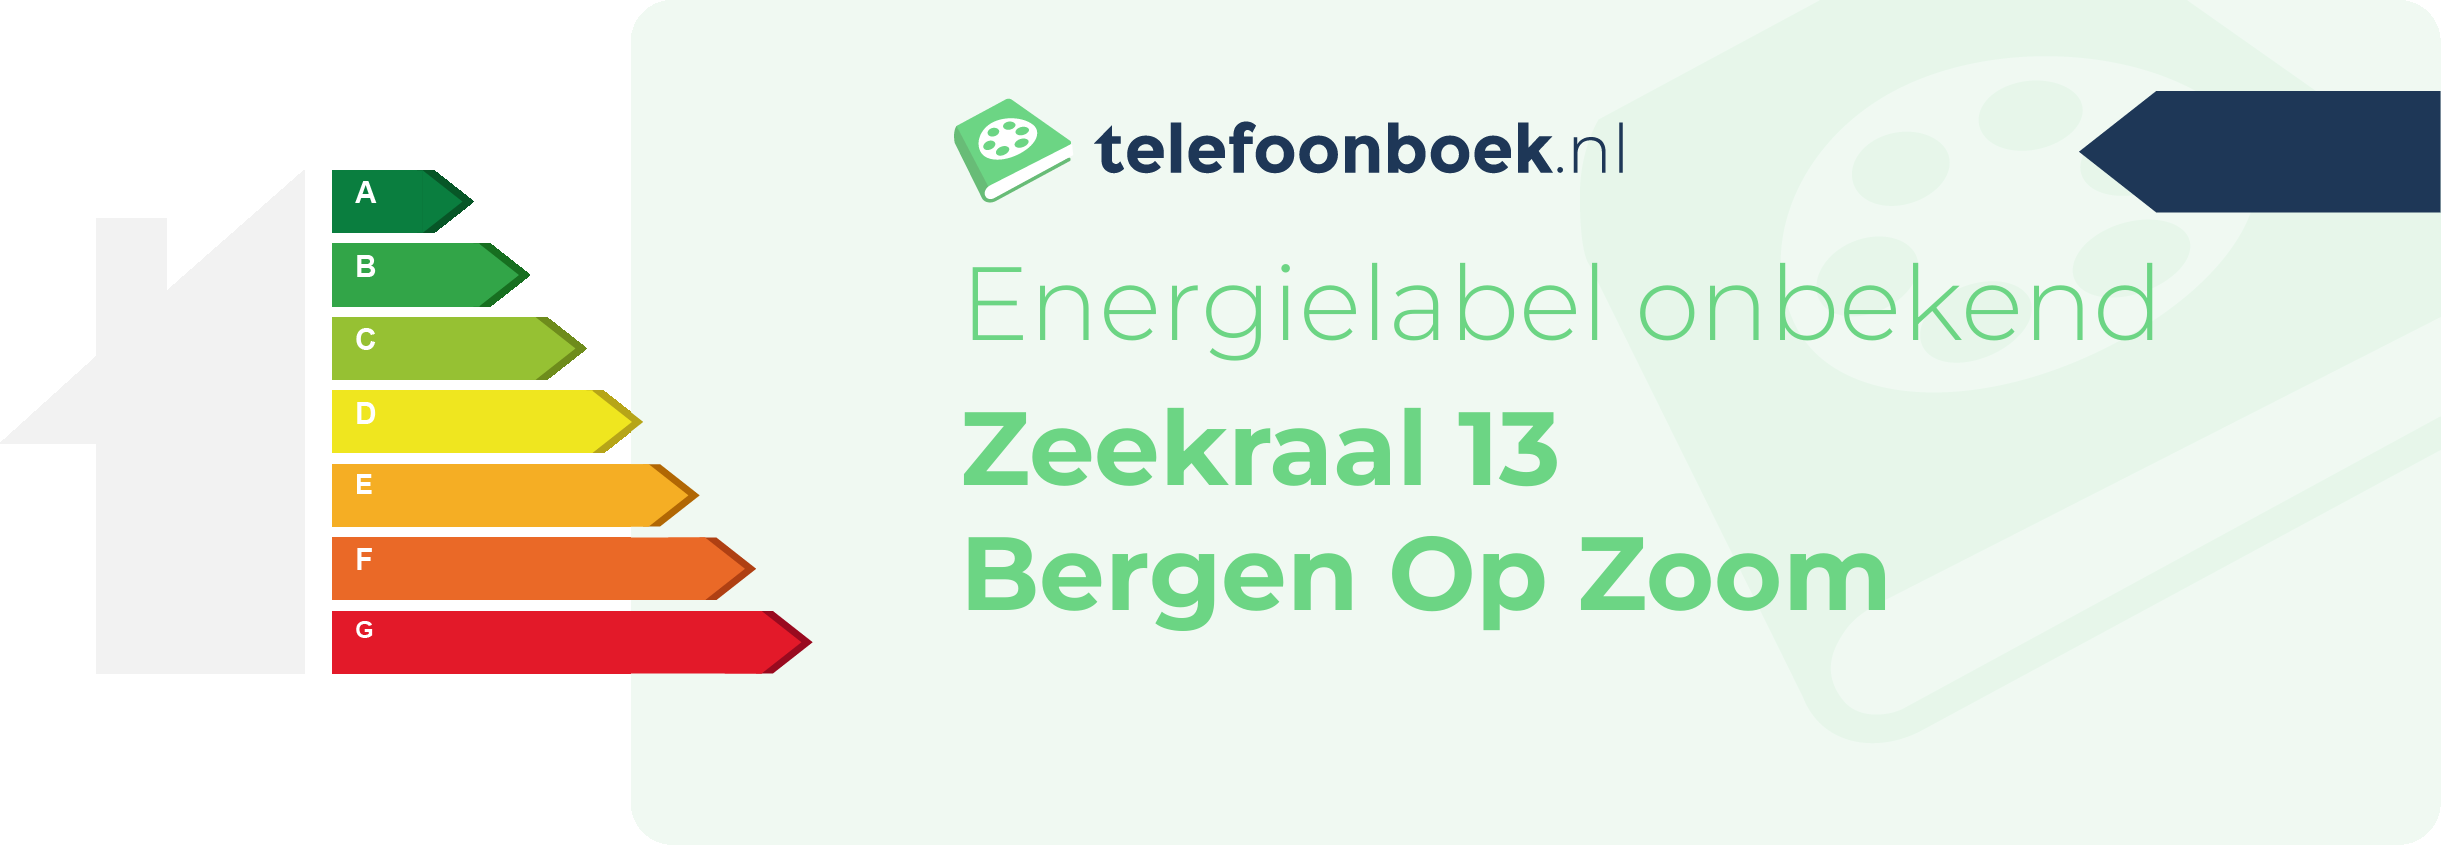 Energielabel Zeekraal 13 Bergen Op Zoom